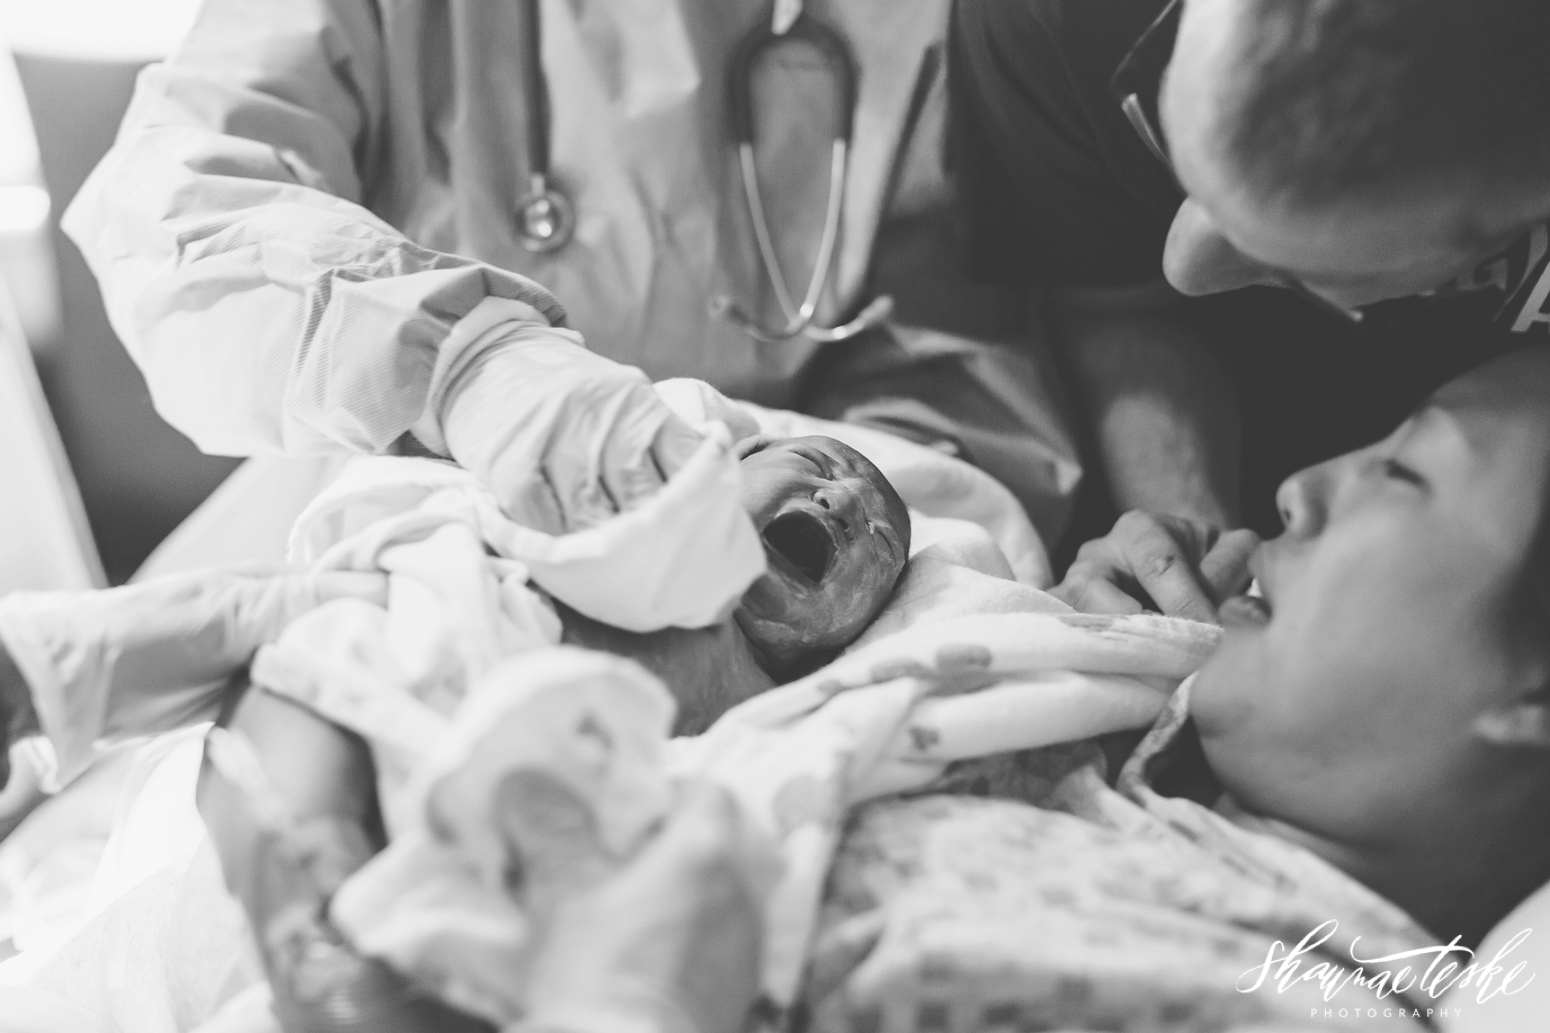 shaunae_teske_wisconsin_photographer_birth-story-stanley-walter-newborn-53